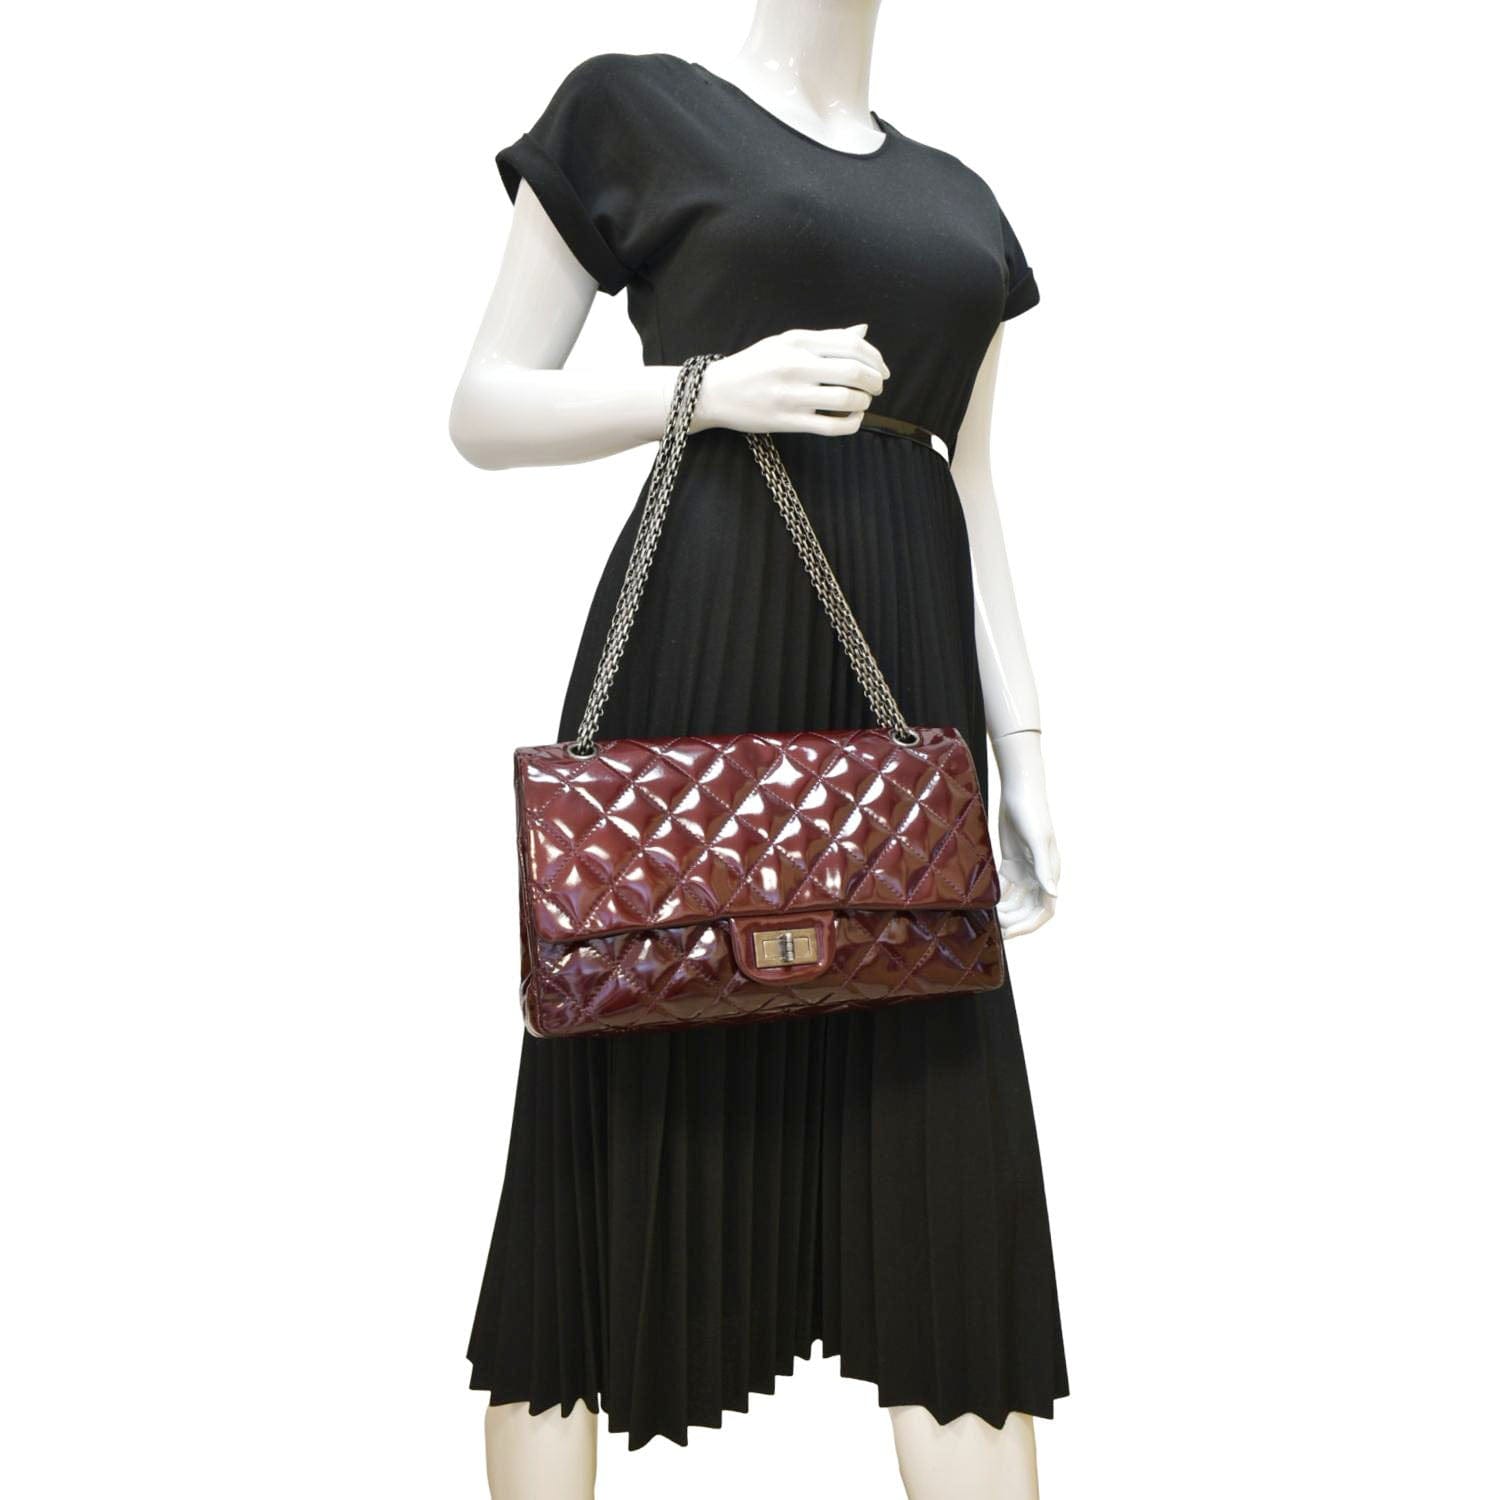 Chanel 2.55 Reissue Double Flap Patent Leather Shoulder Bag